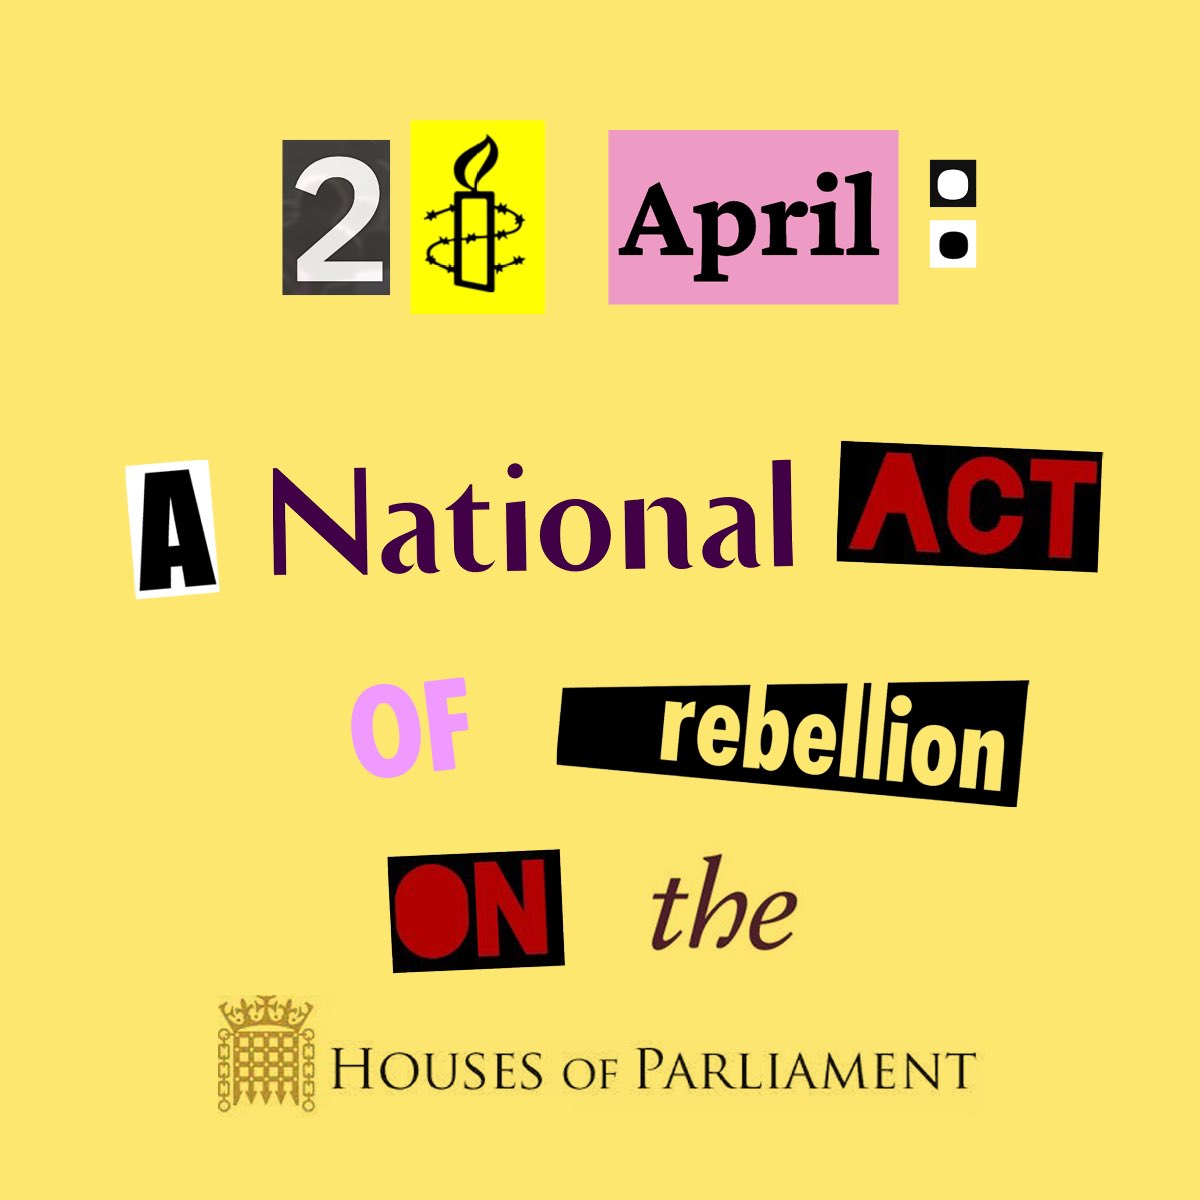 @nw_nicholas Forget boris. #SurroundParliament April 21st.

Google Surround Parliament April to check out the website!